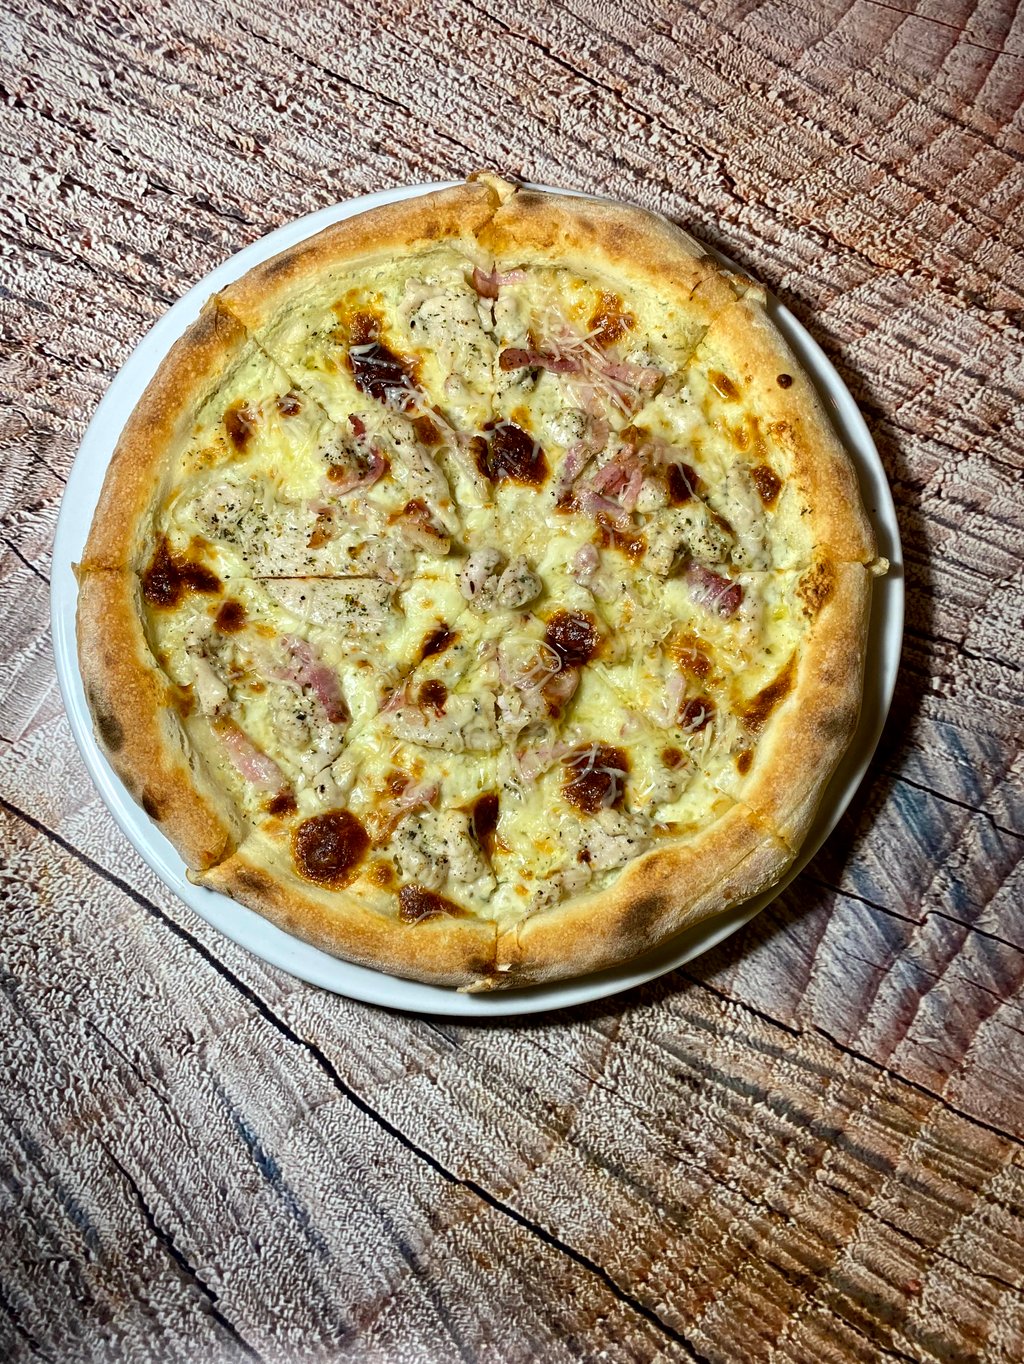 Пицца "Карбонара"